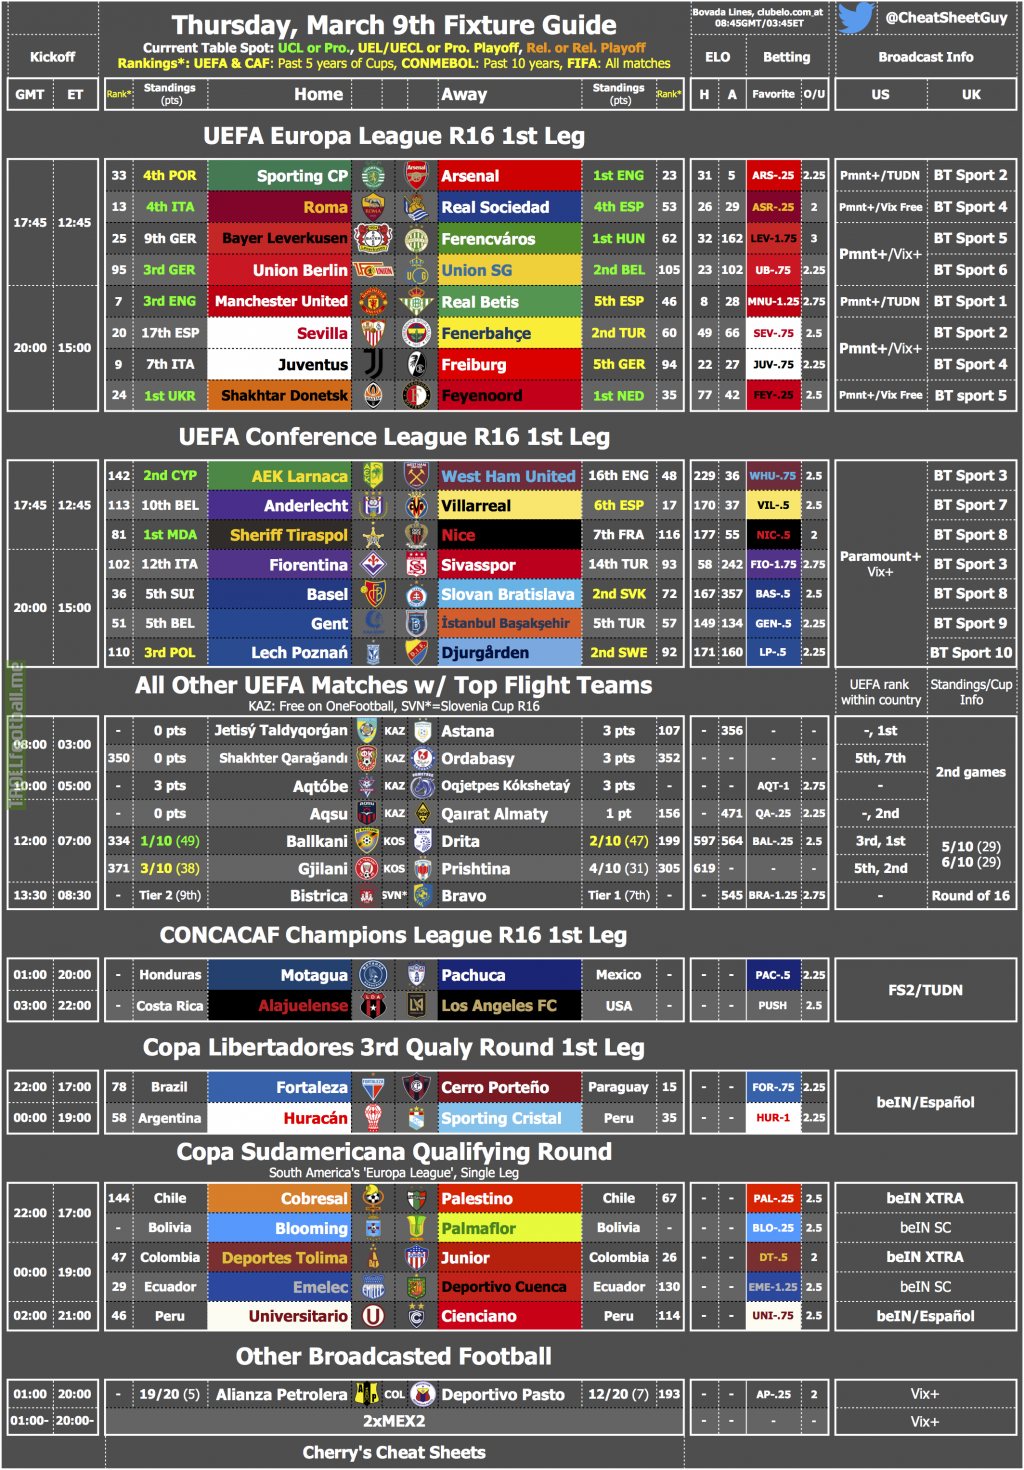 Thursday's Fixture & Broadcast Cheat Sheet [OC]